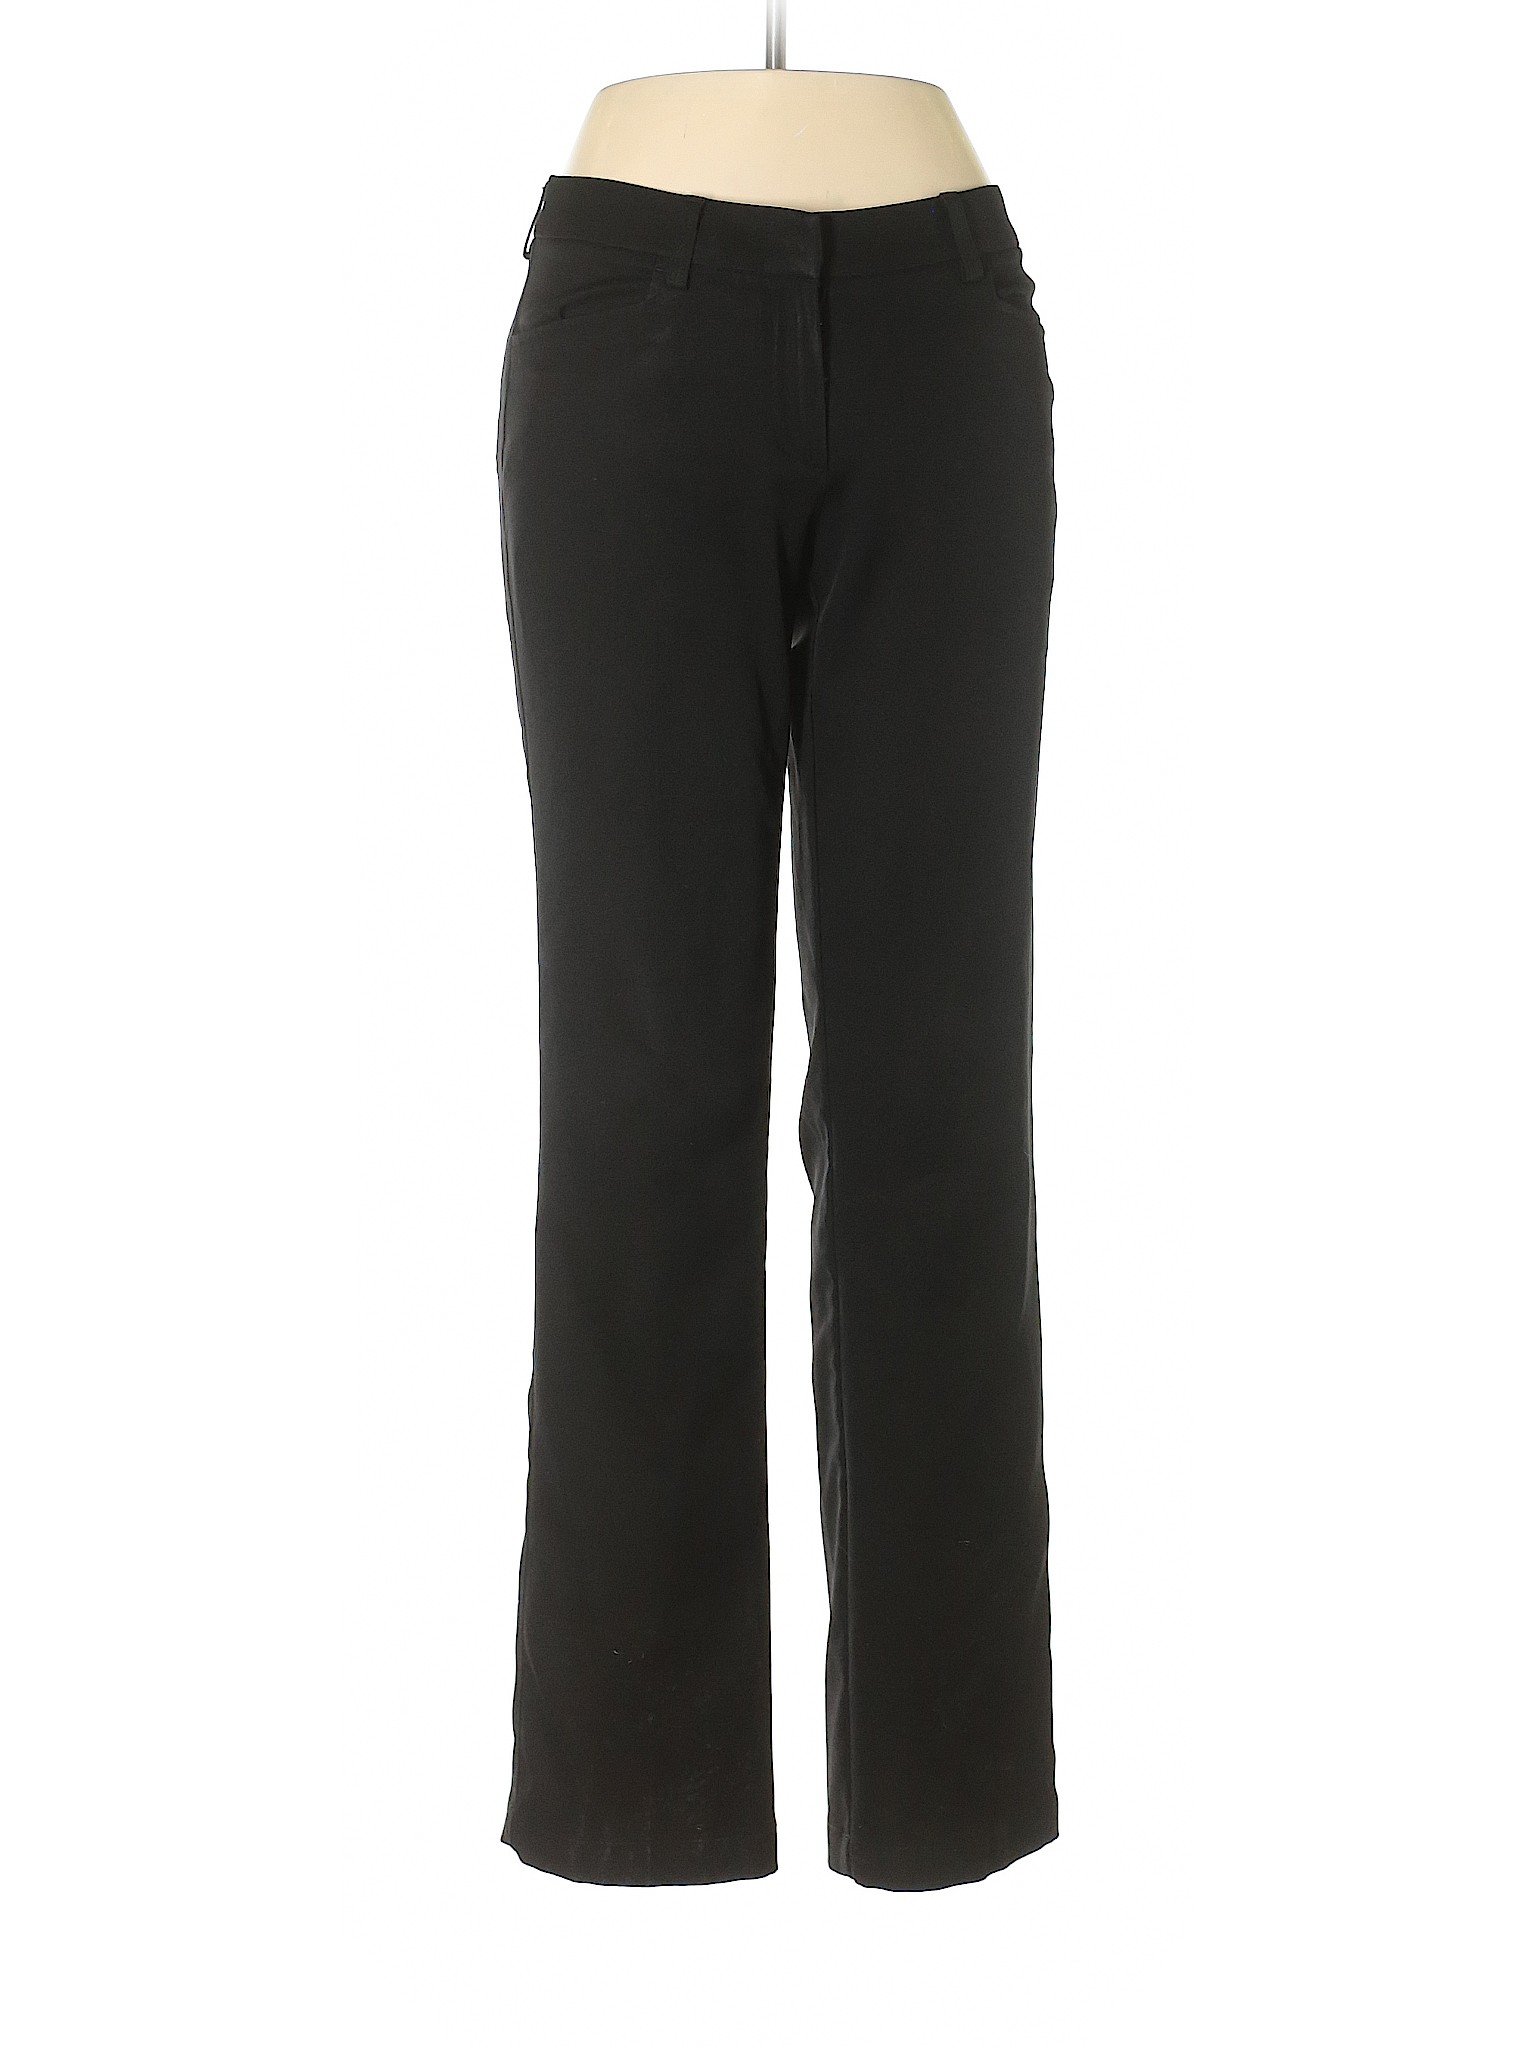 Oobe 100% Polyester Solid Black Dress Pants 31 Waist - 81% off | thredUP